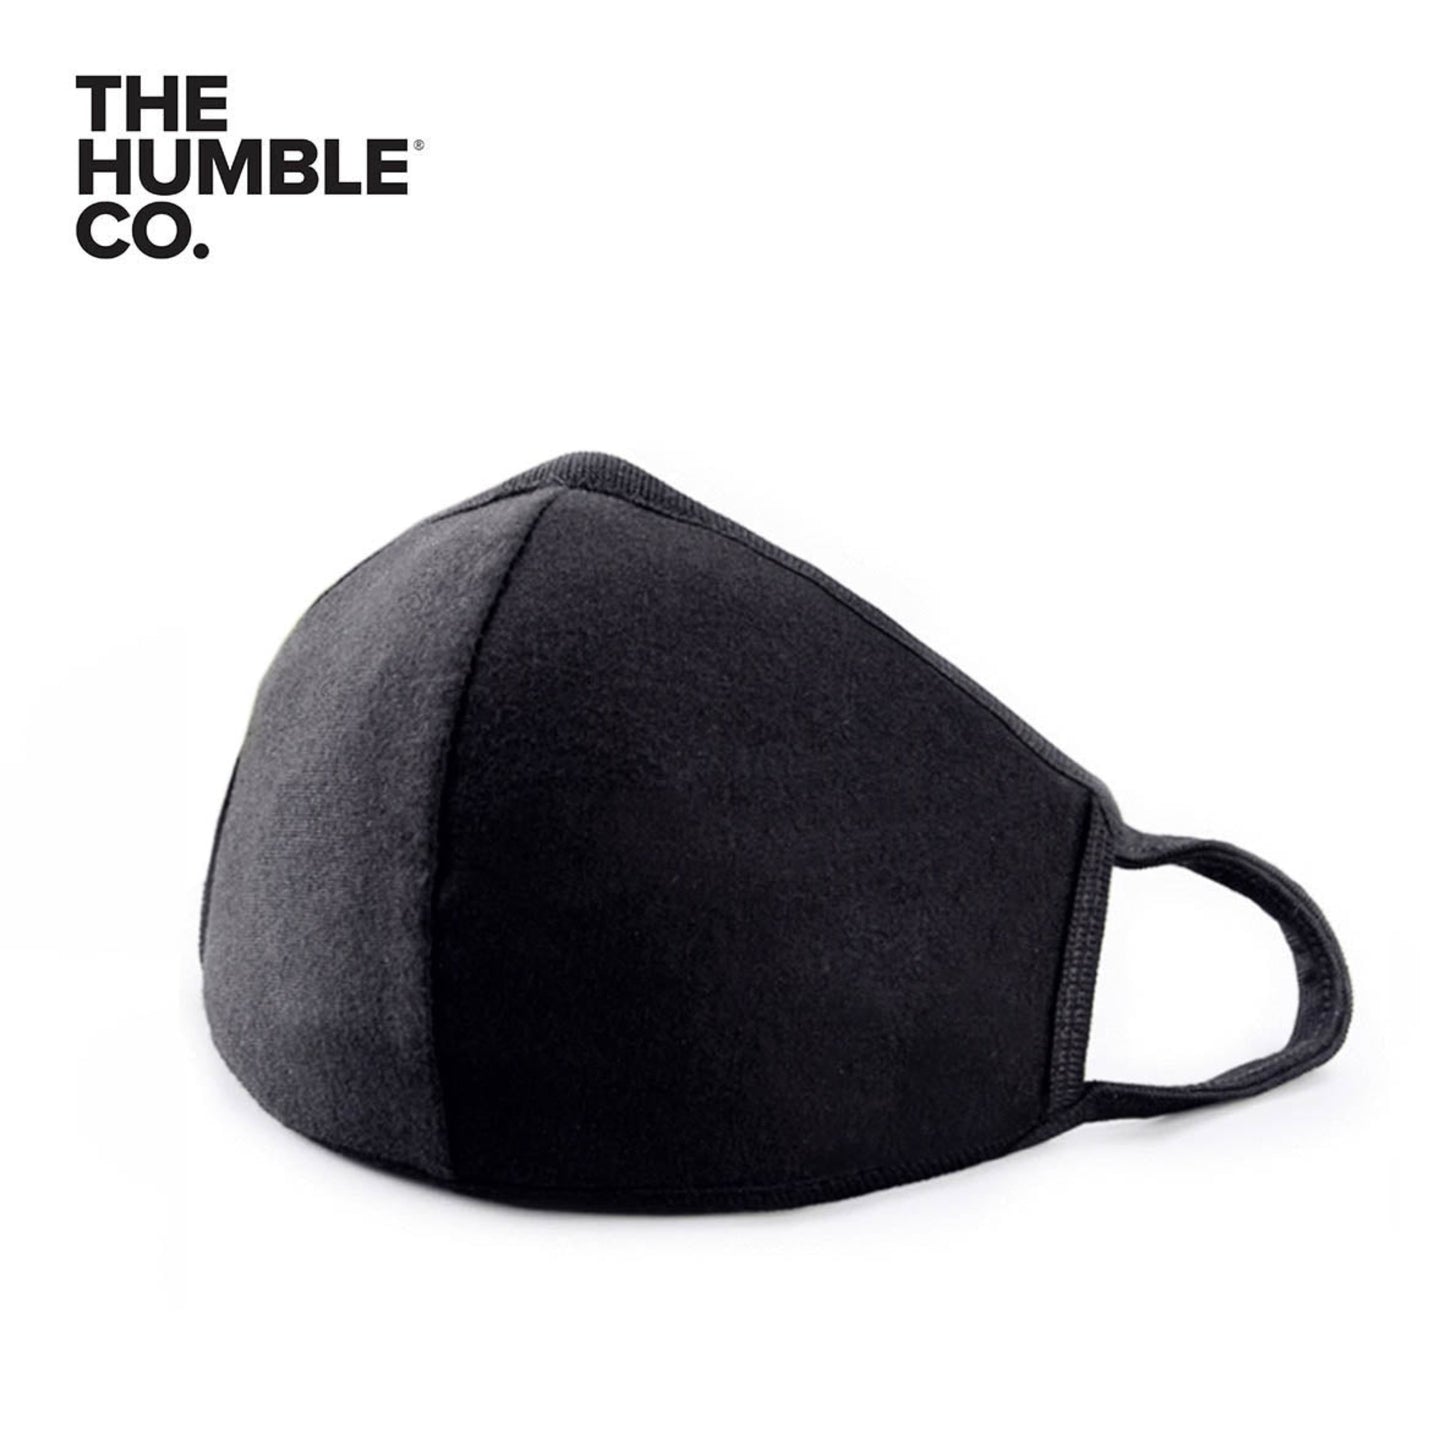 THE HUMBLE & CO Reusable Face Mask, Black (4620447121473)